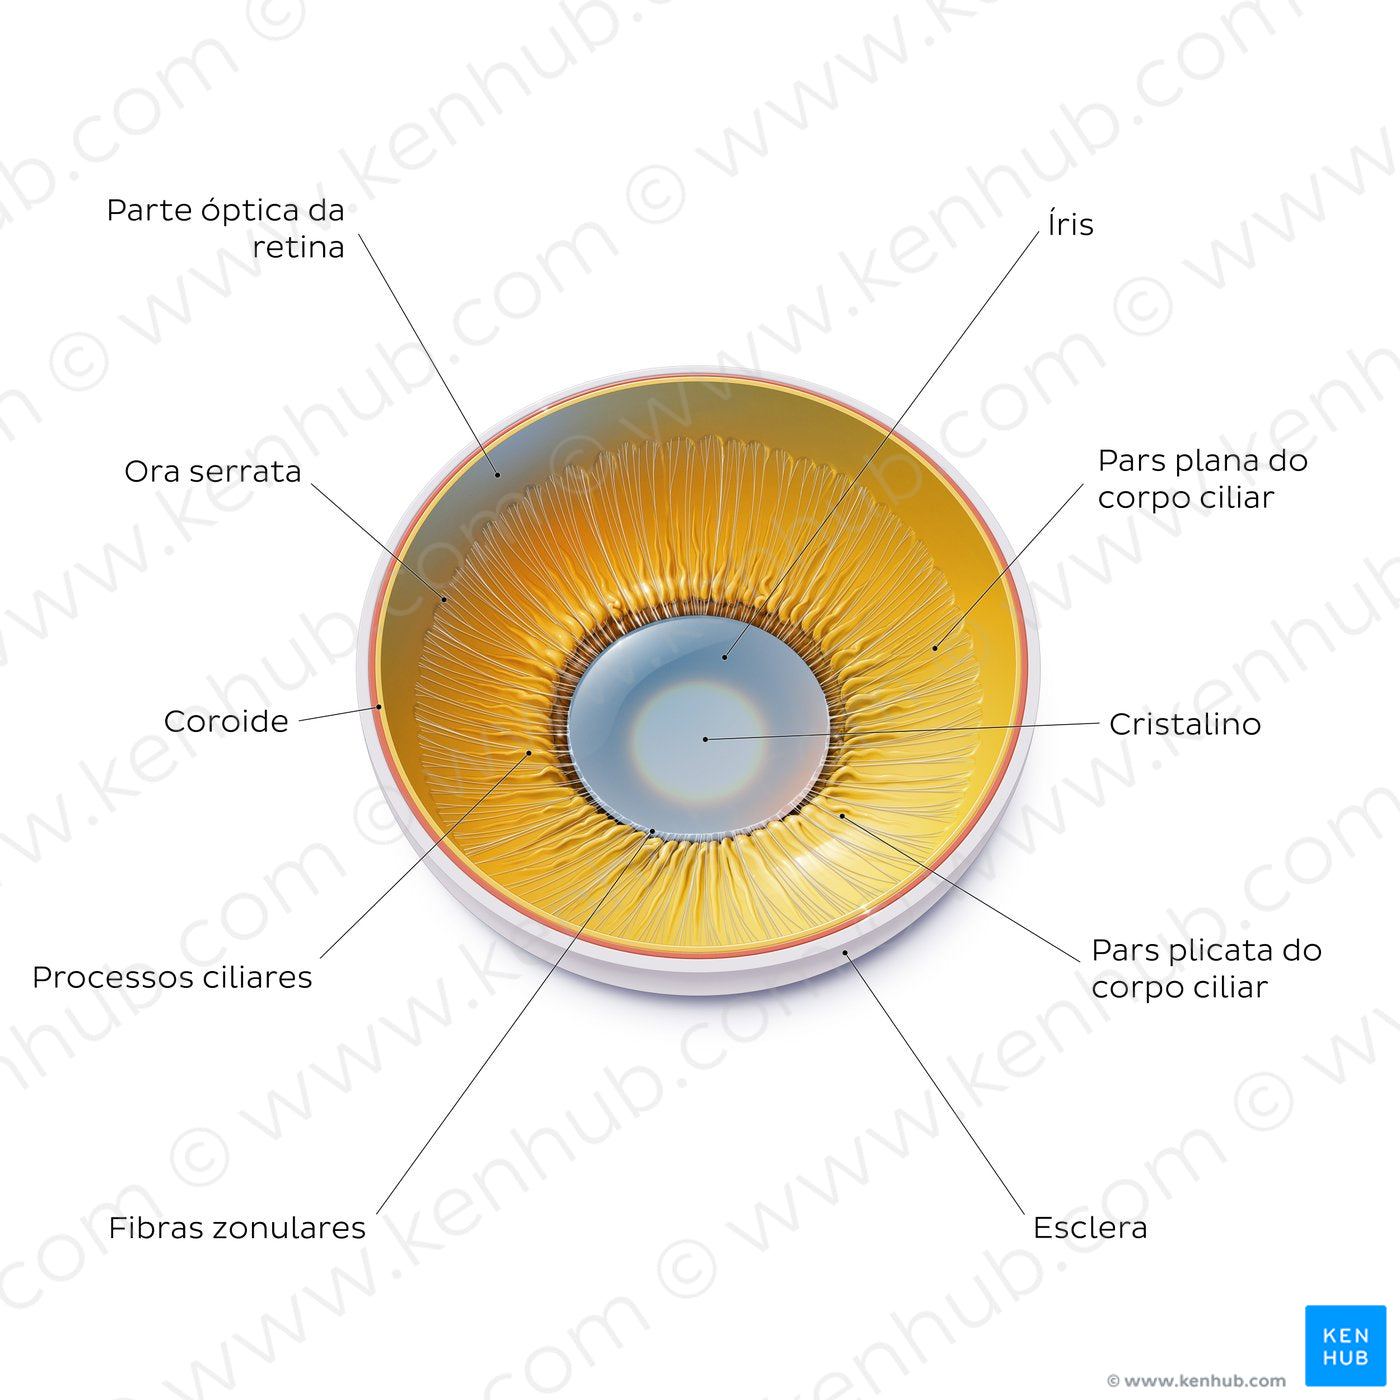 Lens and corpus ciliare: Posterior view (Portuguese)